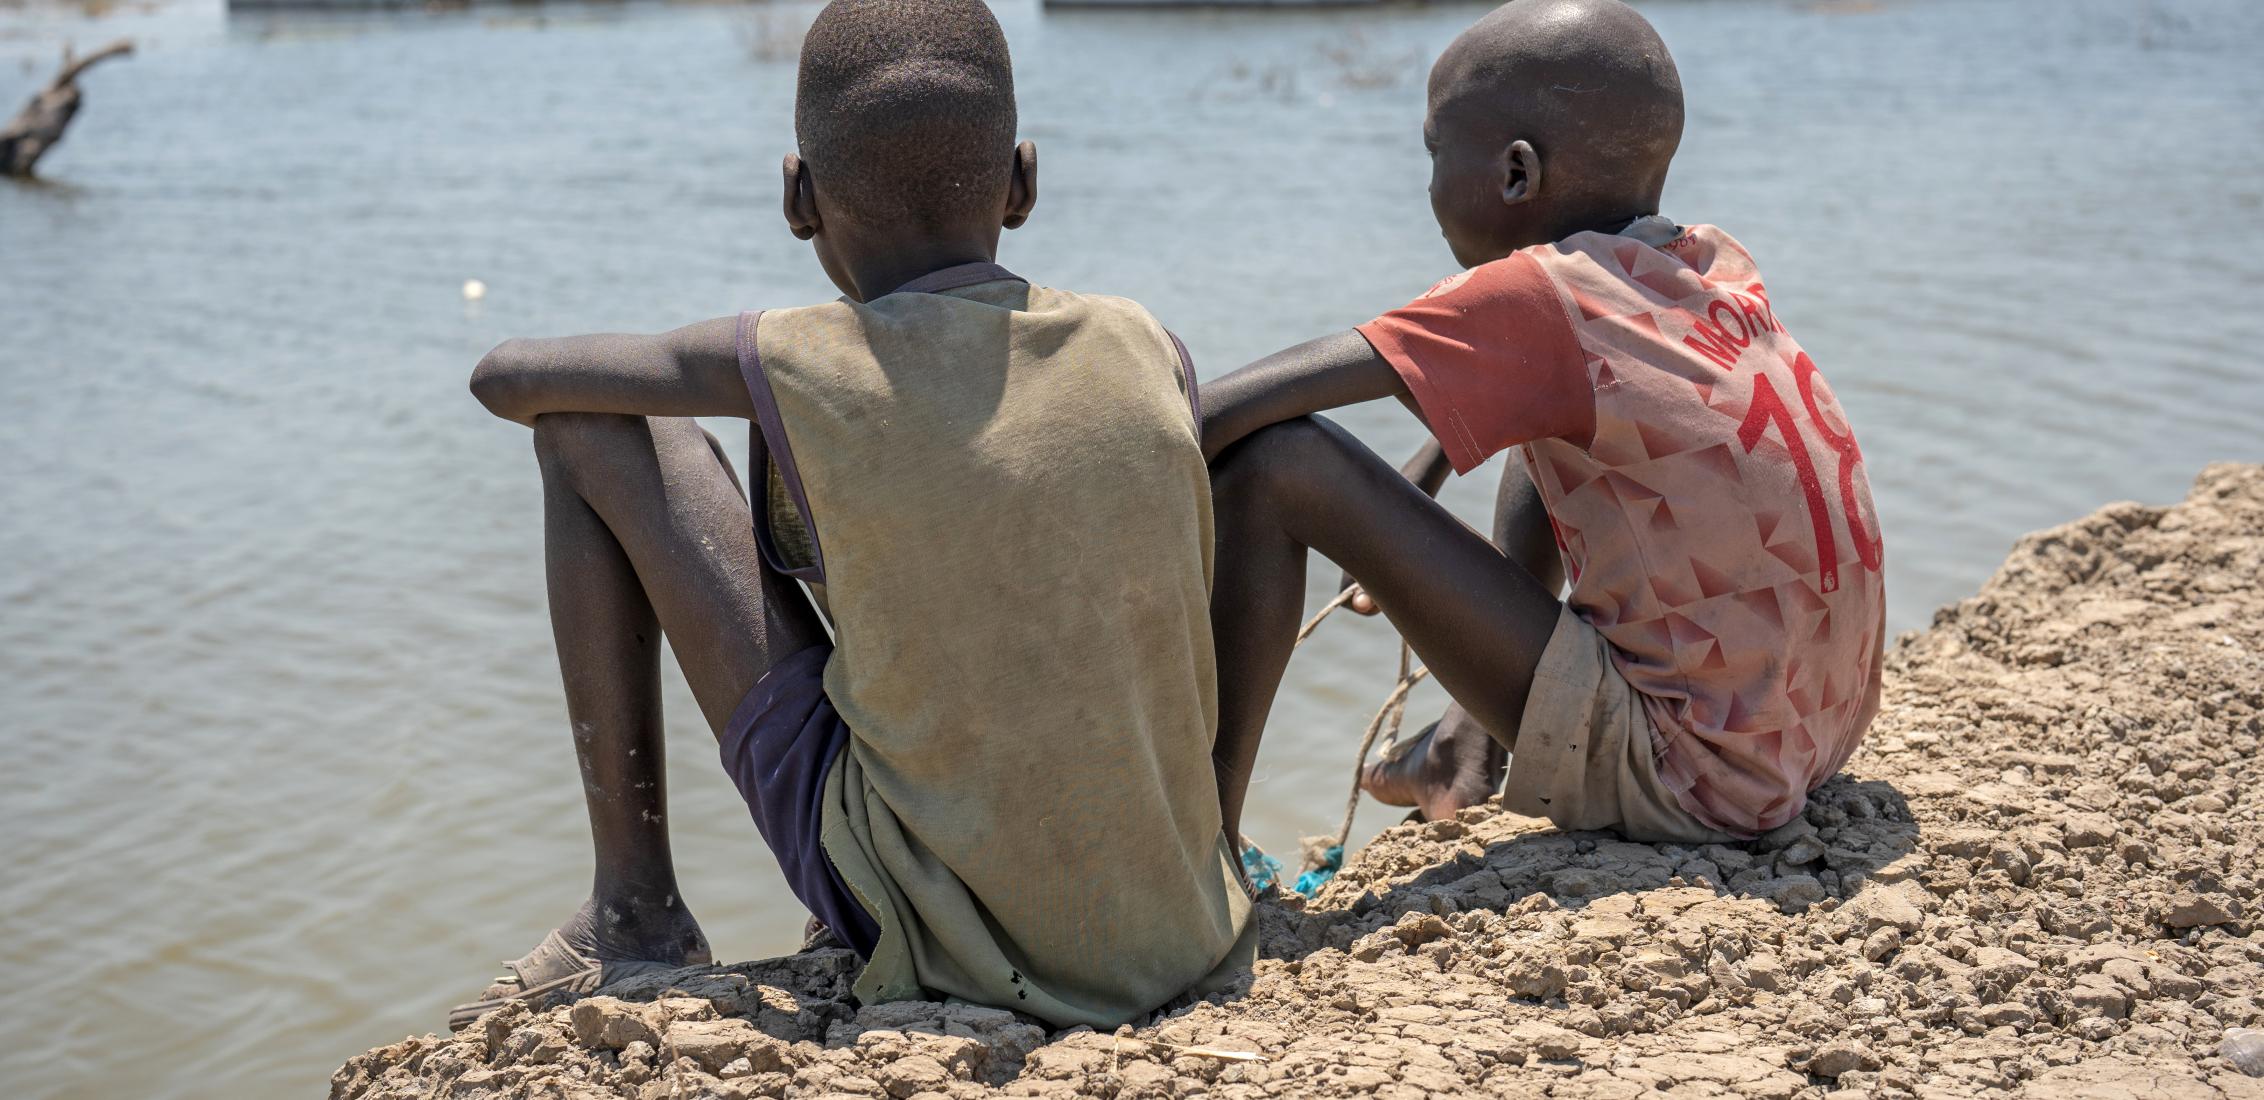 UNI424890/Naftalin في 4 مارس/آذار 2023، صبيان ينظران إلى مدرستهما التي غمرتها الفيضانات في بانتيو، ولاية الوحدة، جنوب السودان. أثرت الفيضانات الواسعة على آلاف الأشخاص في جميع أنحاء ولاية الوحدة، واضطر العديد منهم إلى الفرار من منازلهم..